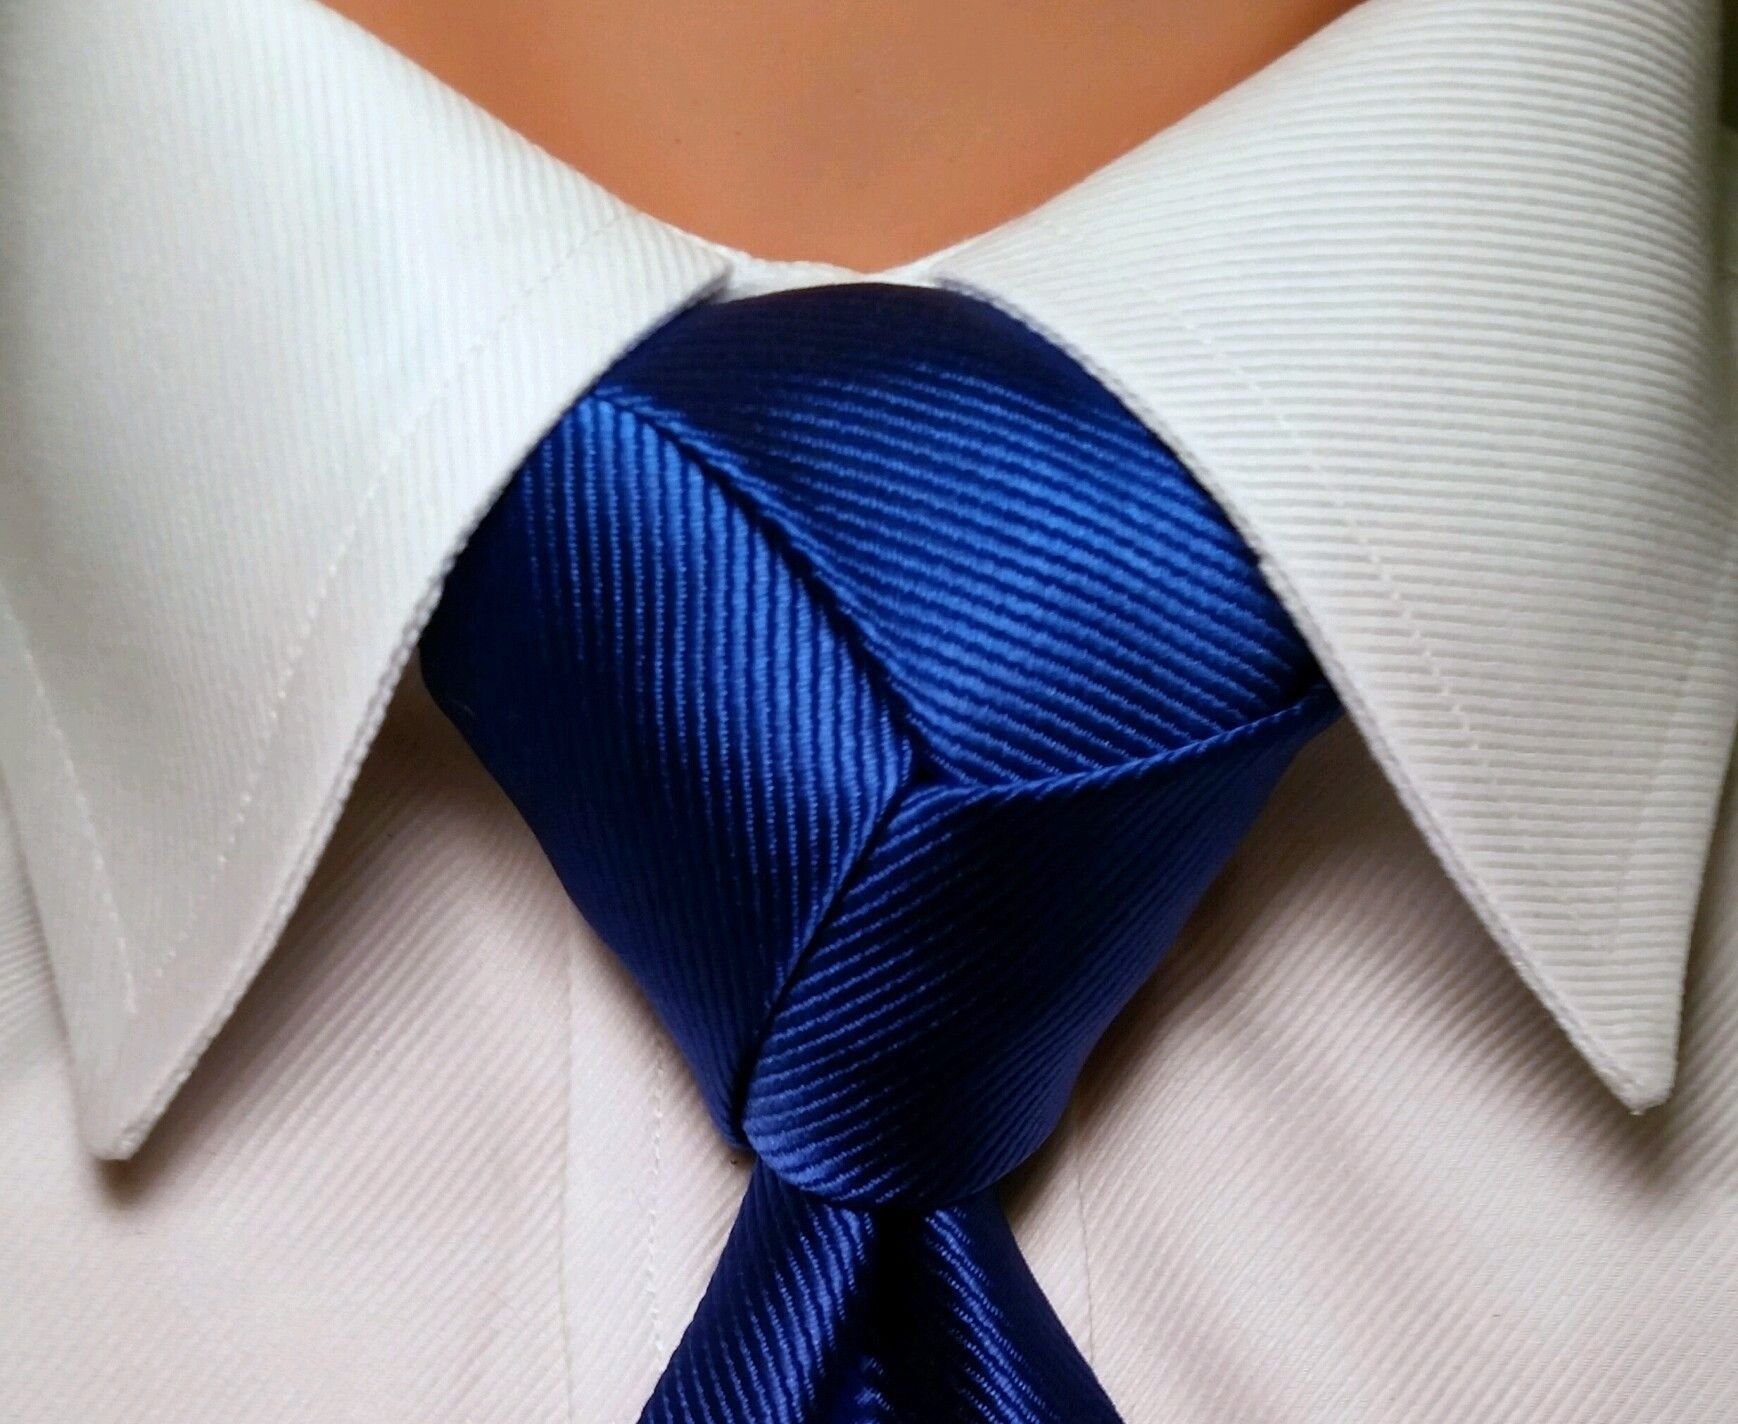 Галстук перевод. Тринити галстук. Узел Элдридж галстук. Узел Тринити. Галстук мужской.